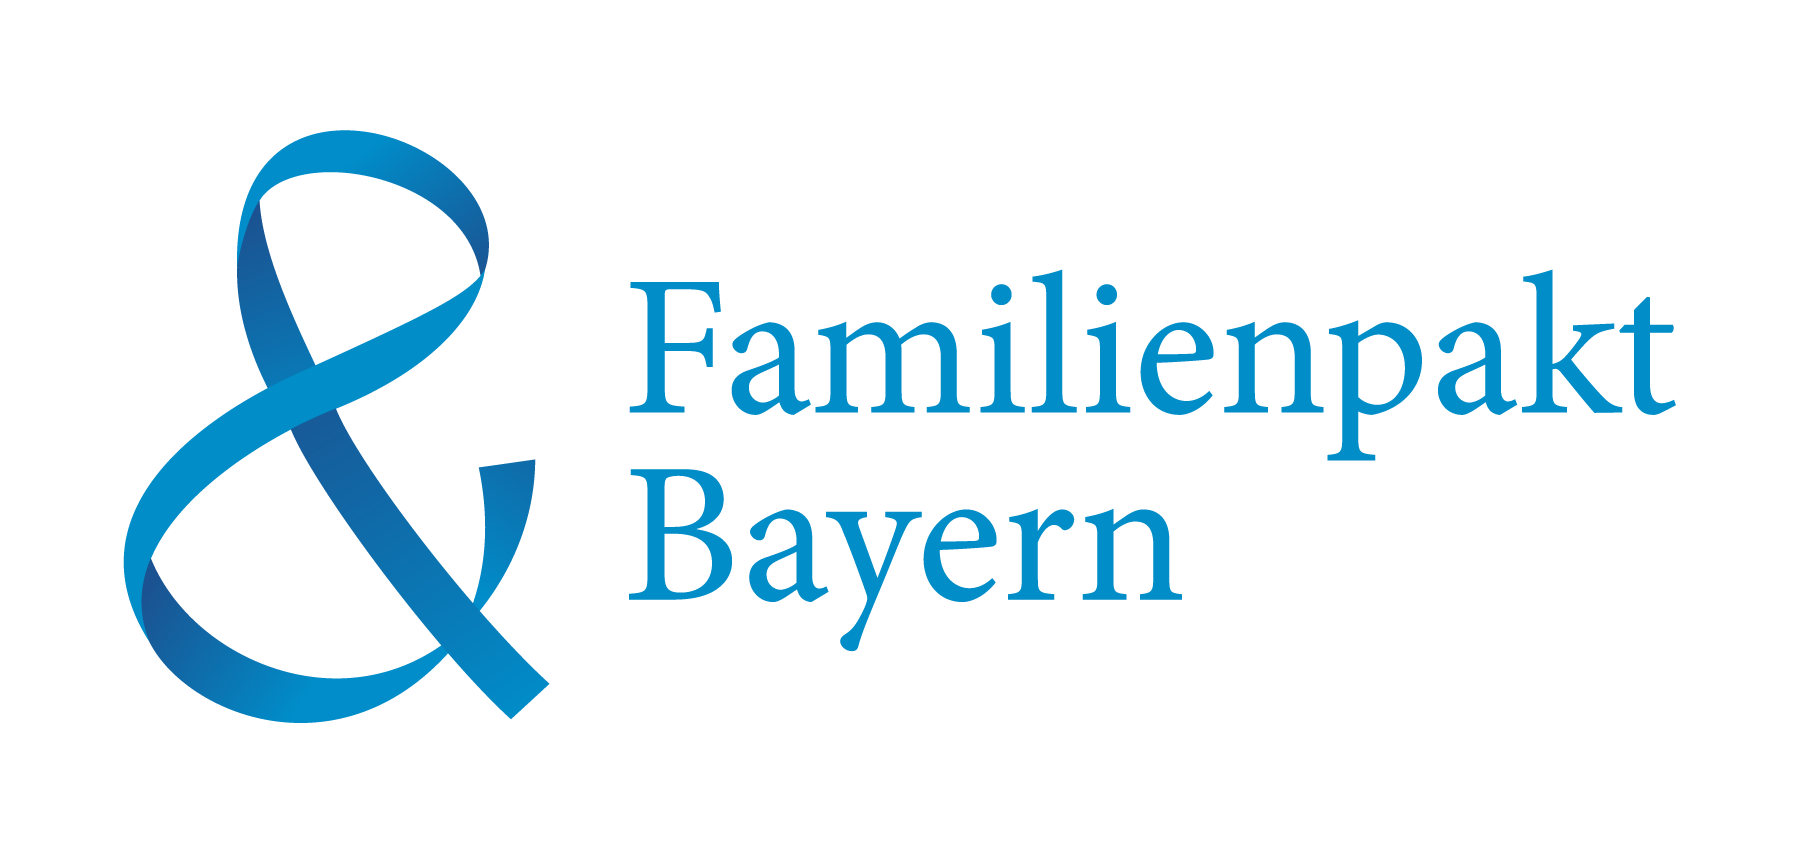 Familienpakt Bayern Logo